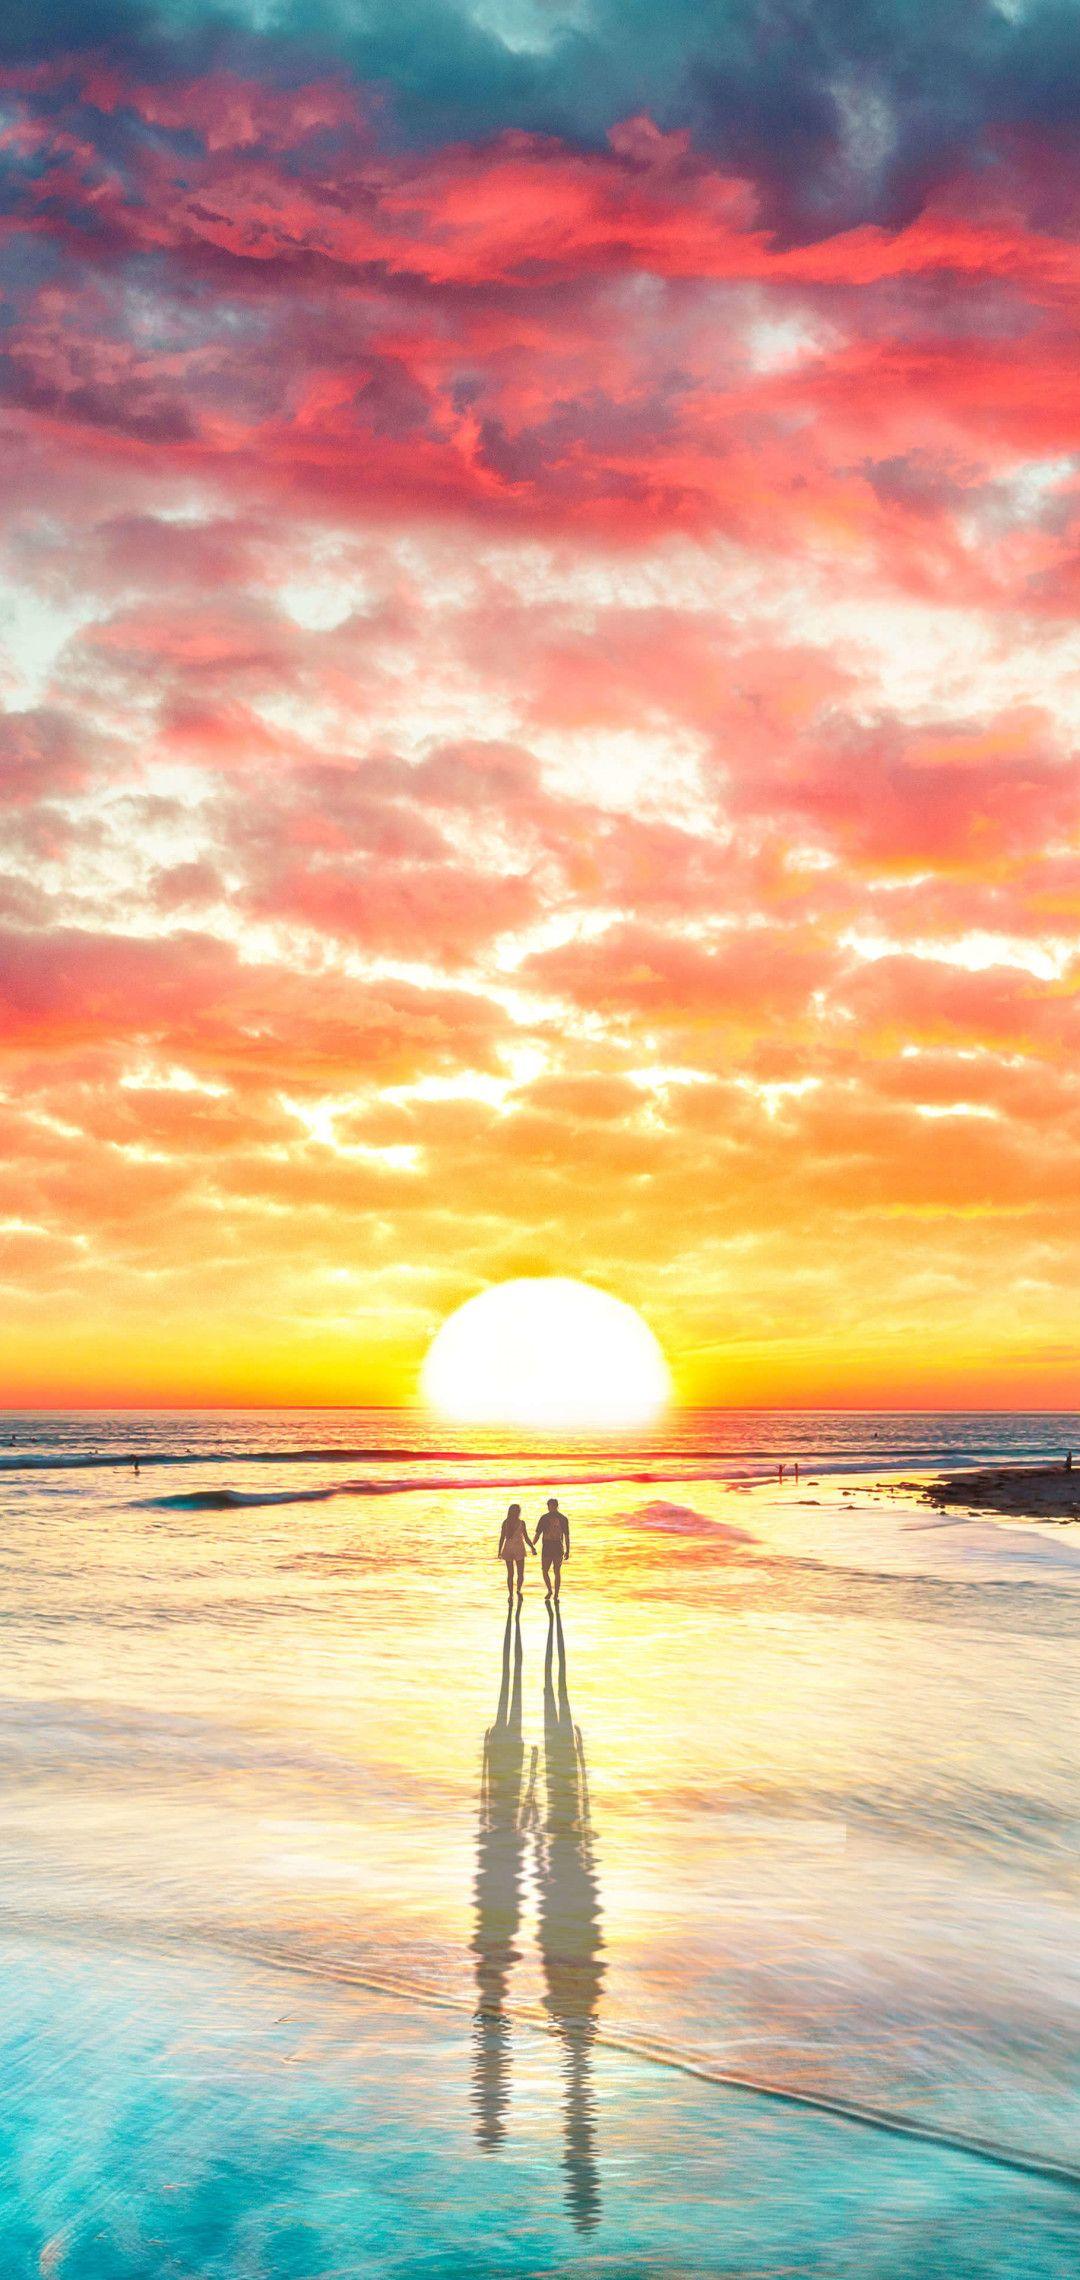 Sunrise Beach Iphone Wallpapers - Top Free Sunrise Beach Iphone